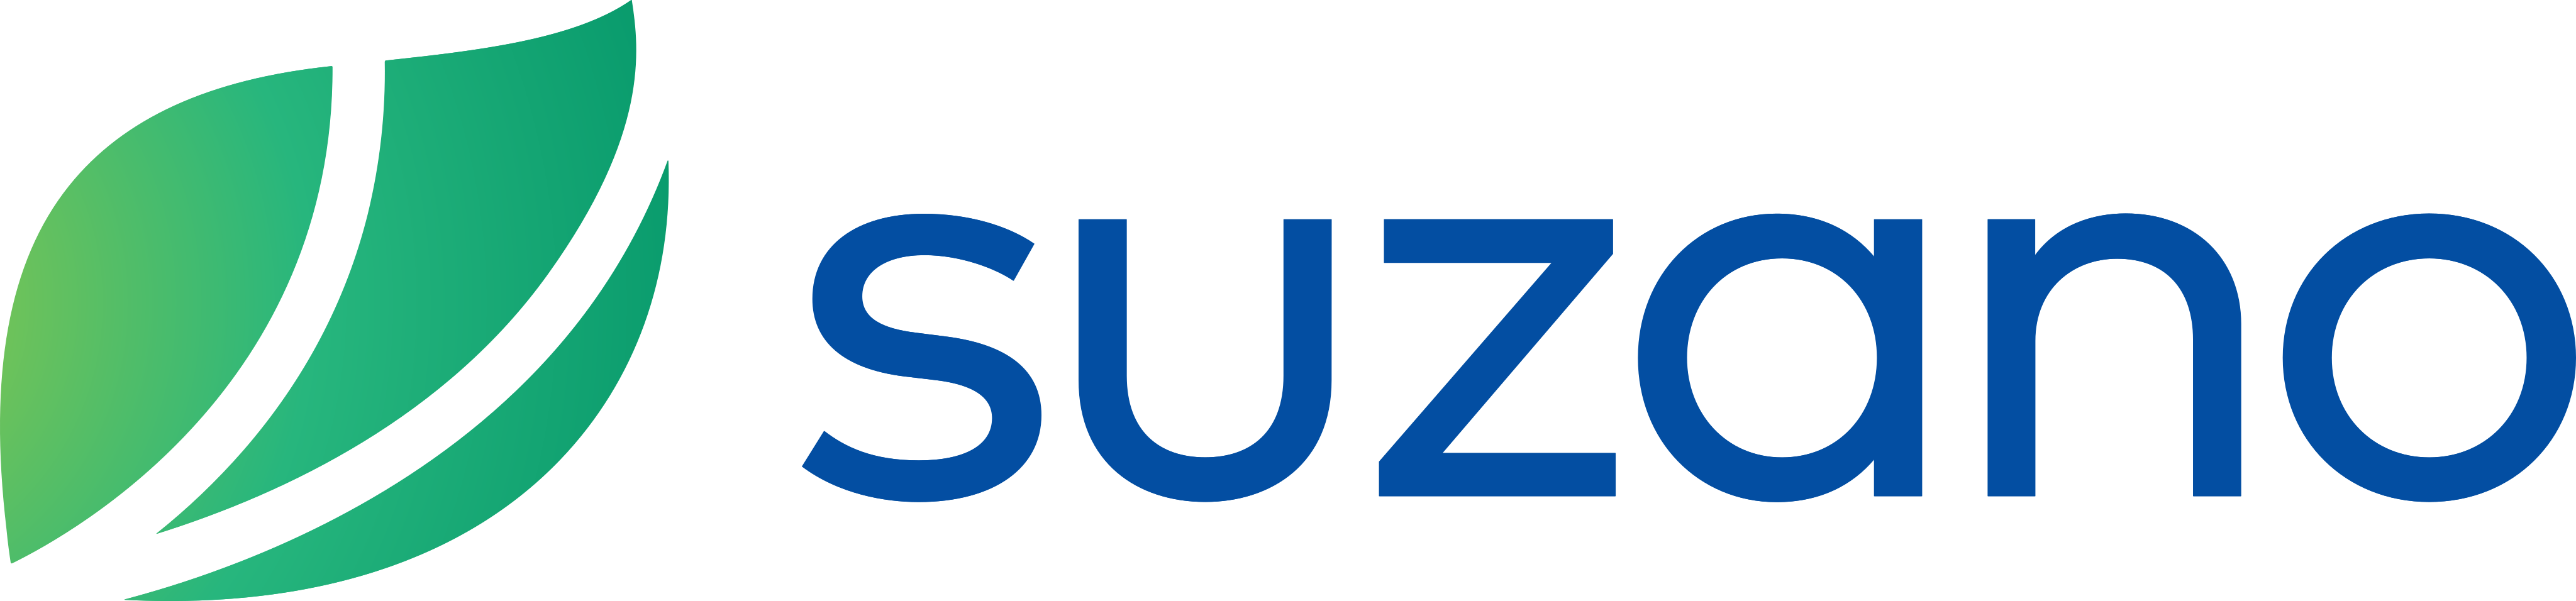 Suzano